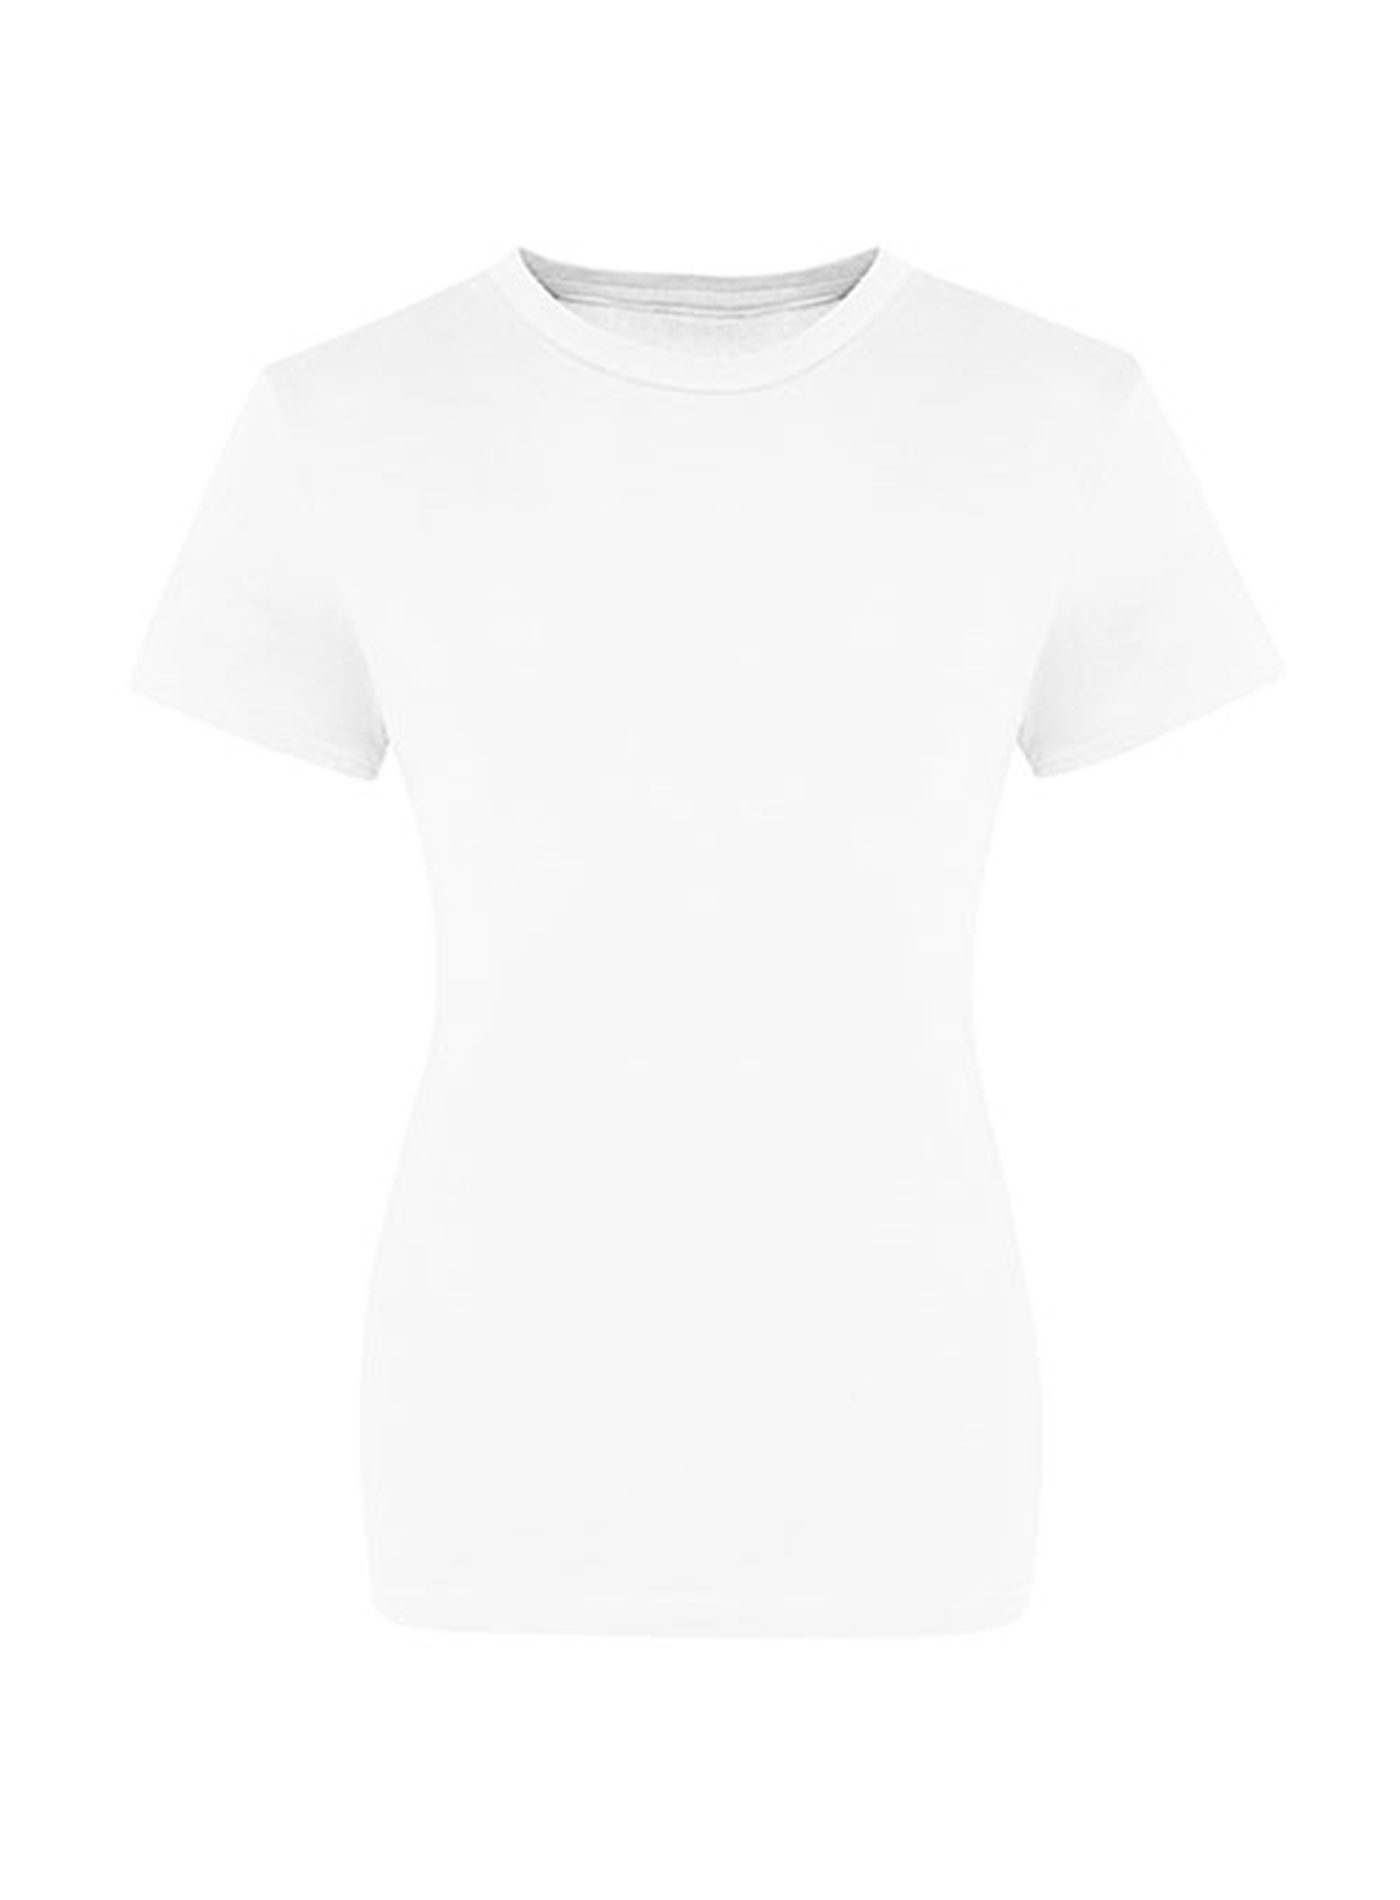 Dámské tričko Just Ts - Bílá S